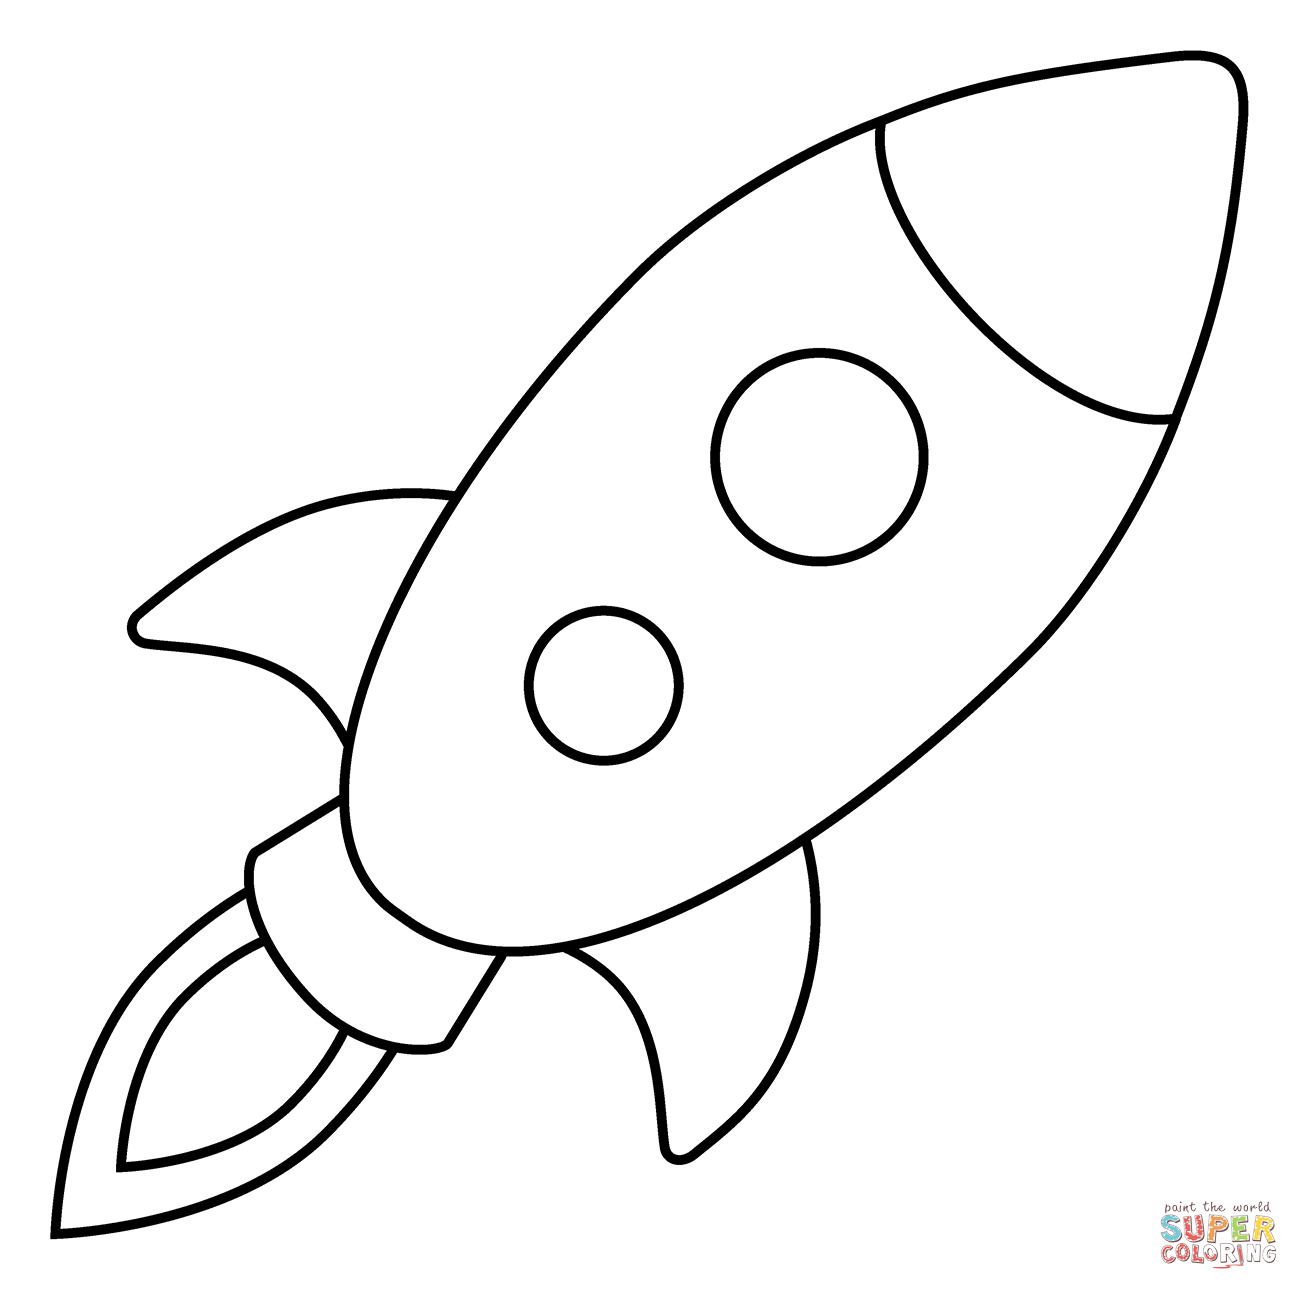 Rocket emoji for children